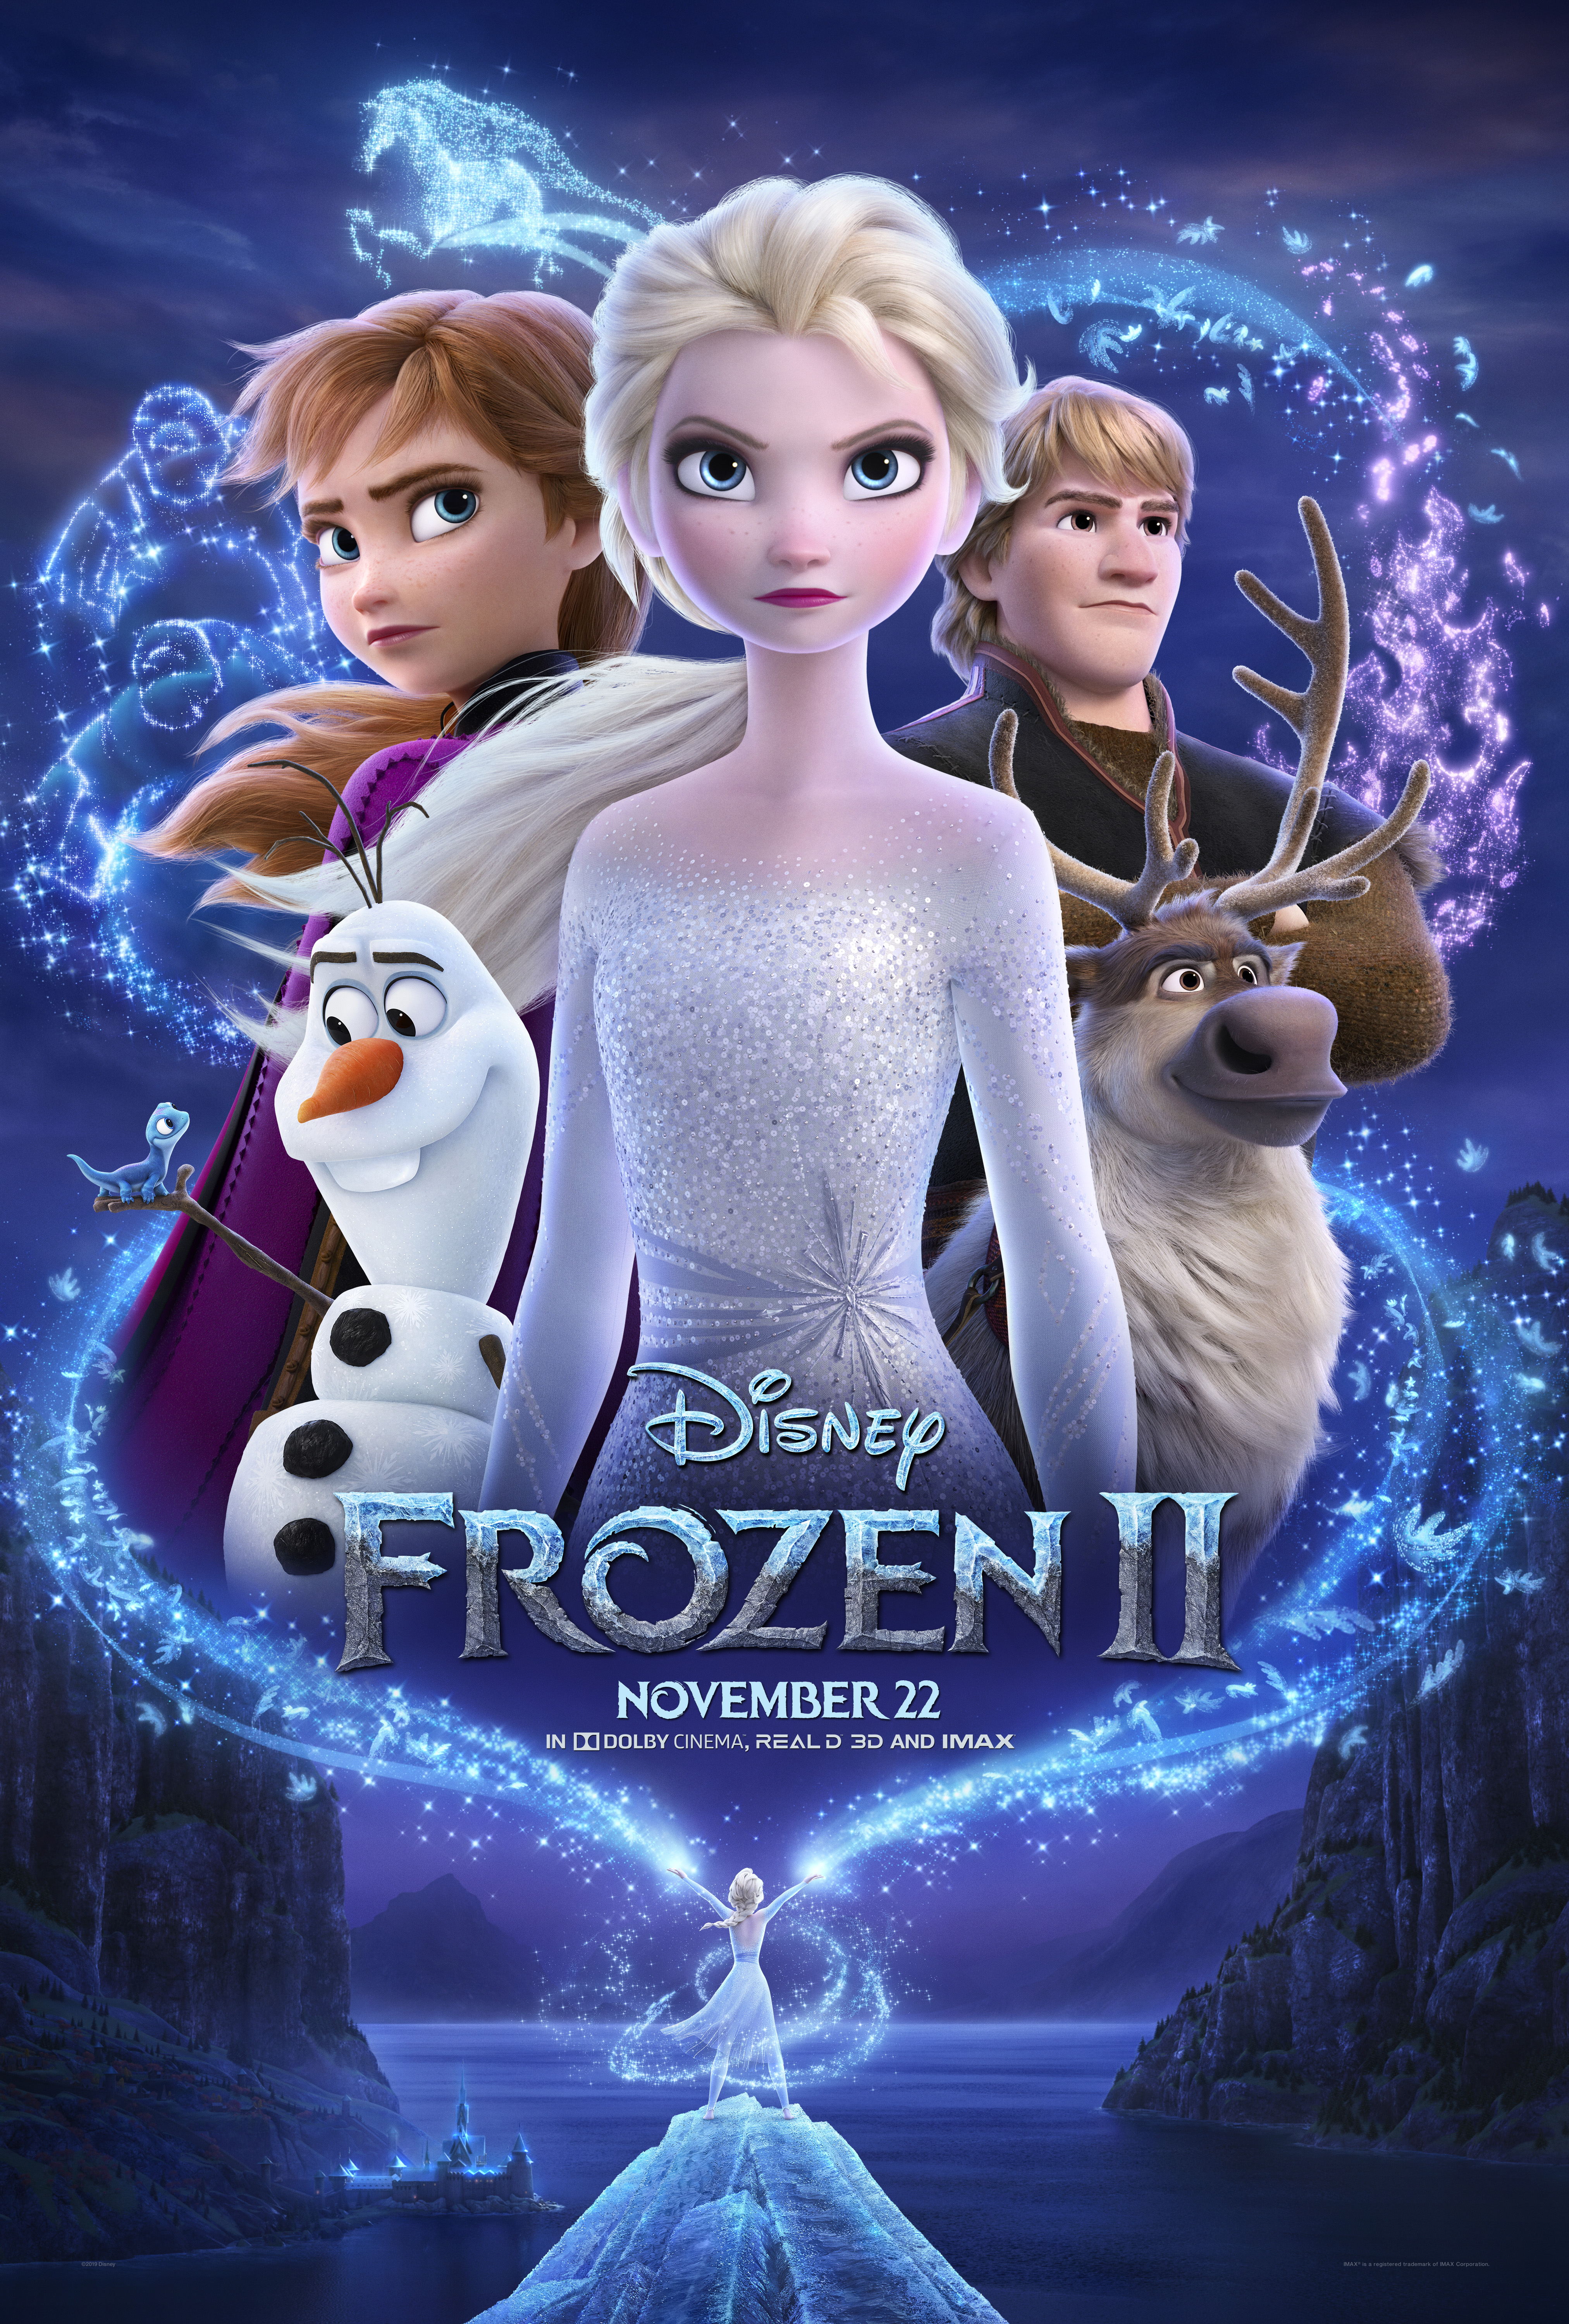 Ondis 24 Toy Box Clip Box for Kids Disney Frozen Olaf Elsa Sven Kristoff